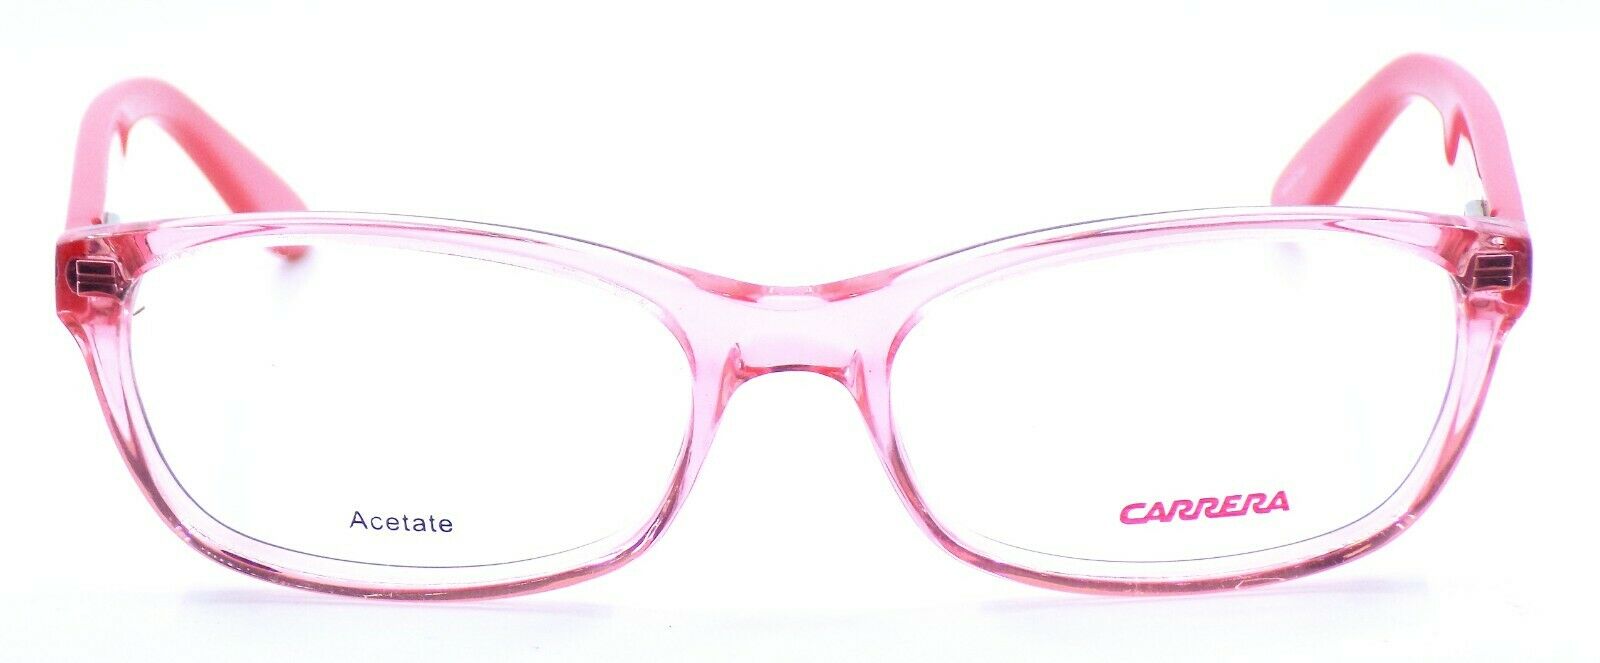 2-Carrera Carrerino 56 TSU Kids' Eyeglasses Frames 50-16-125 Pink Coral + CASE-762753804259-IKSpecs